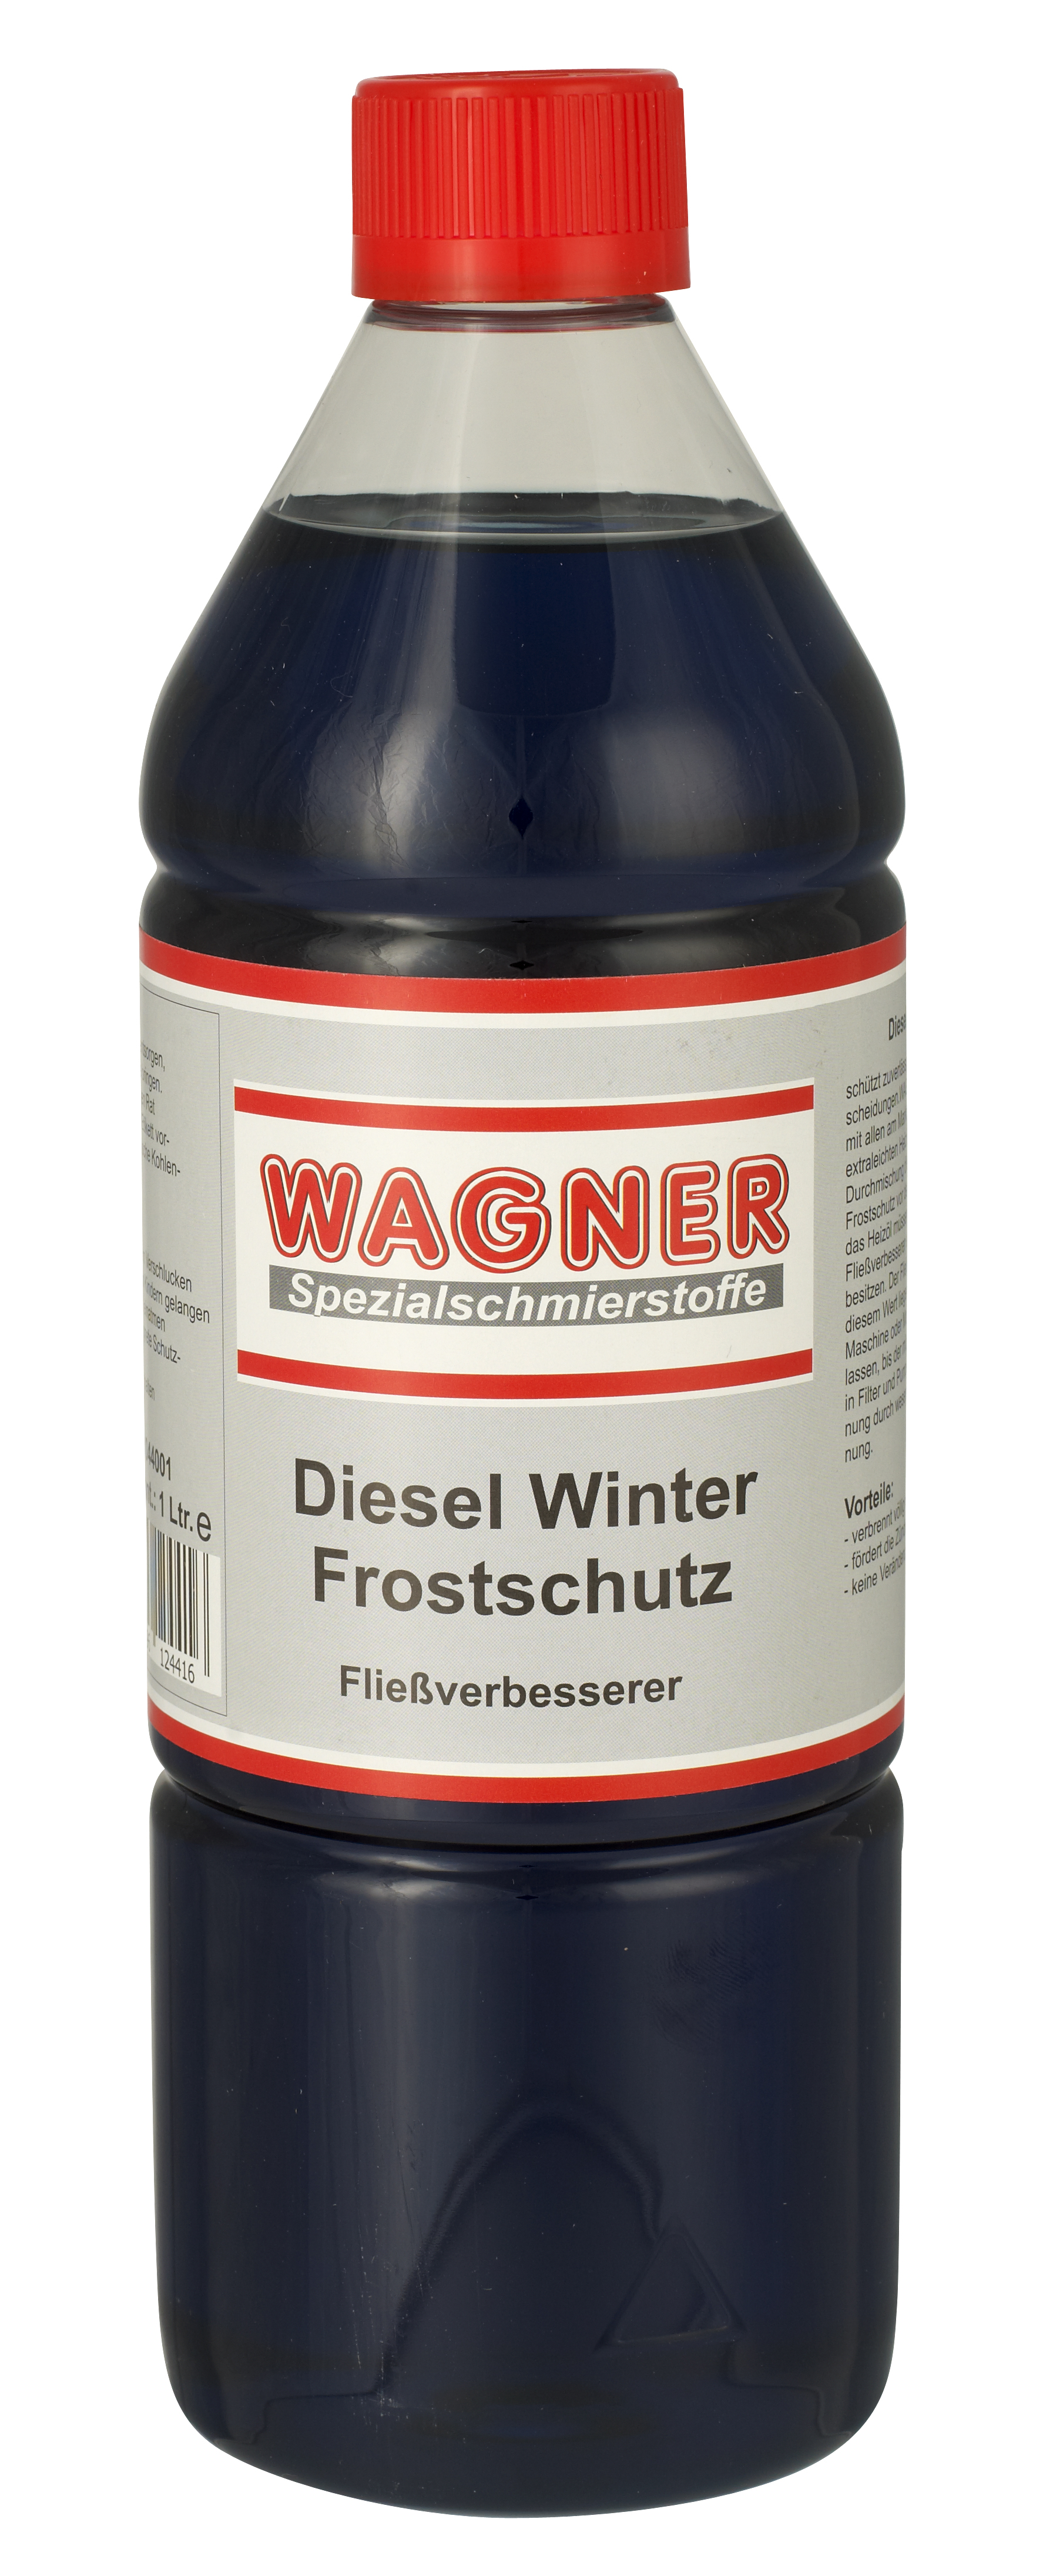 https://www.scheuerlein-werkzeuge.de/media/image/32/52/8d/tempdiesel_frostschutz_winter_kaelteschutz_wagnerZe2C6k4nkY7aY.jpg